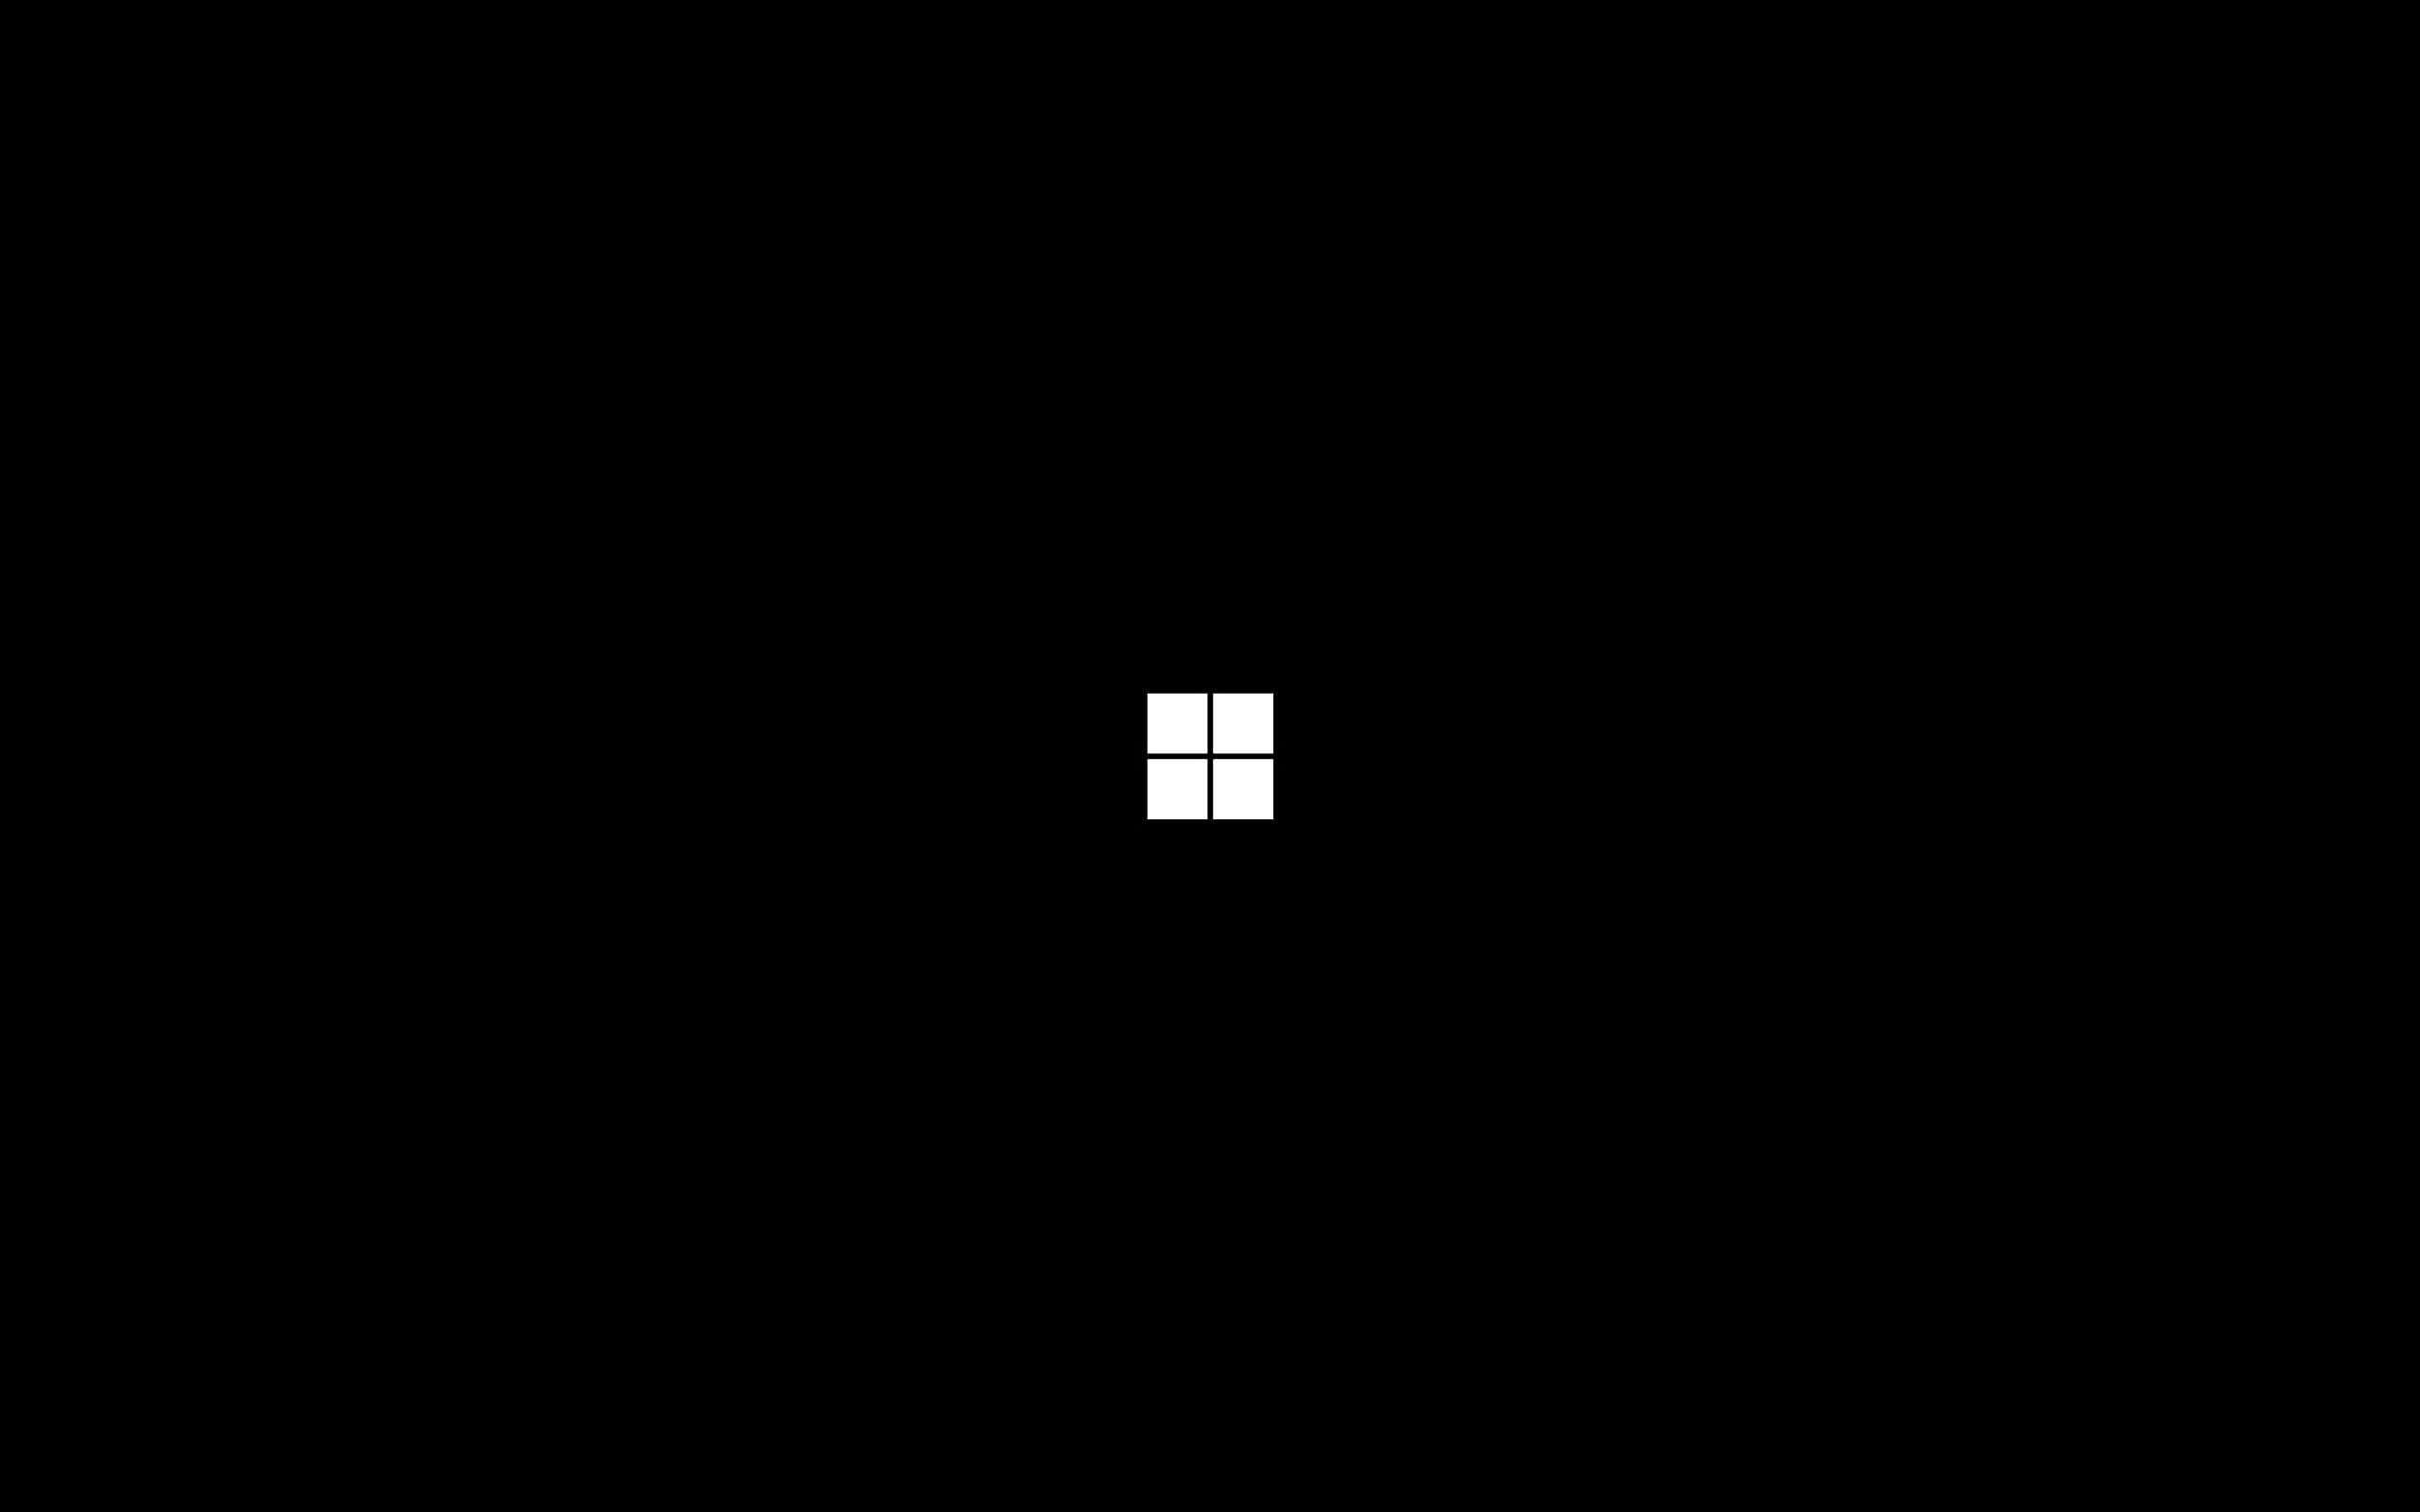 Windows 10, Microsoft Windows, operating system, minimalism